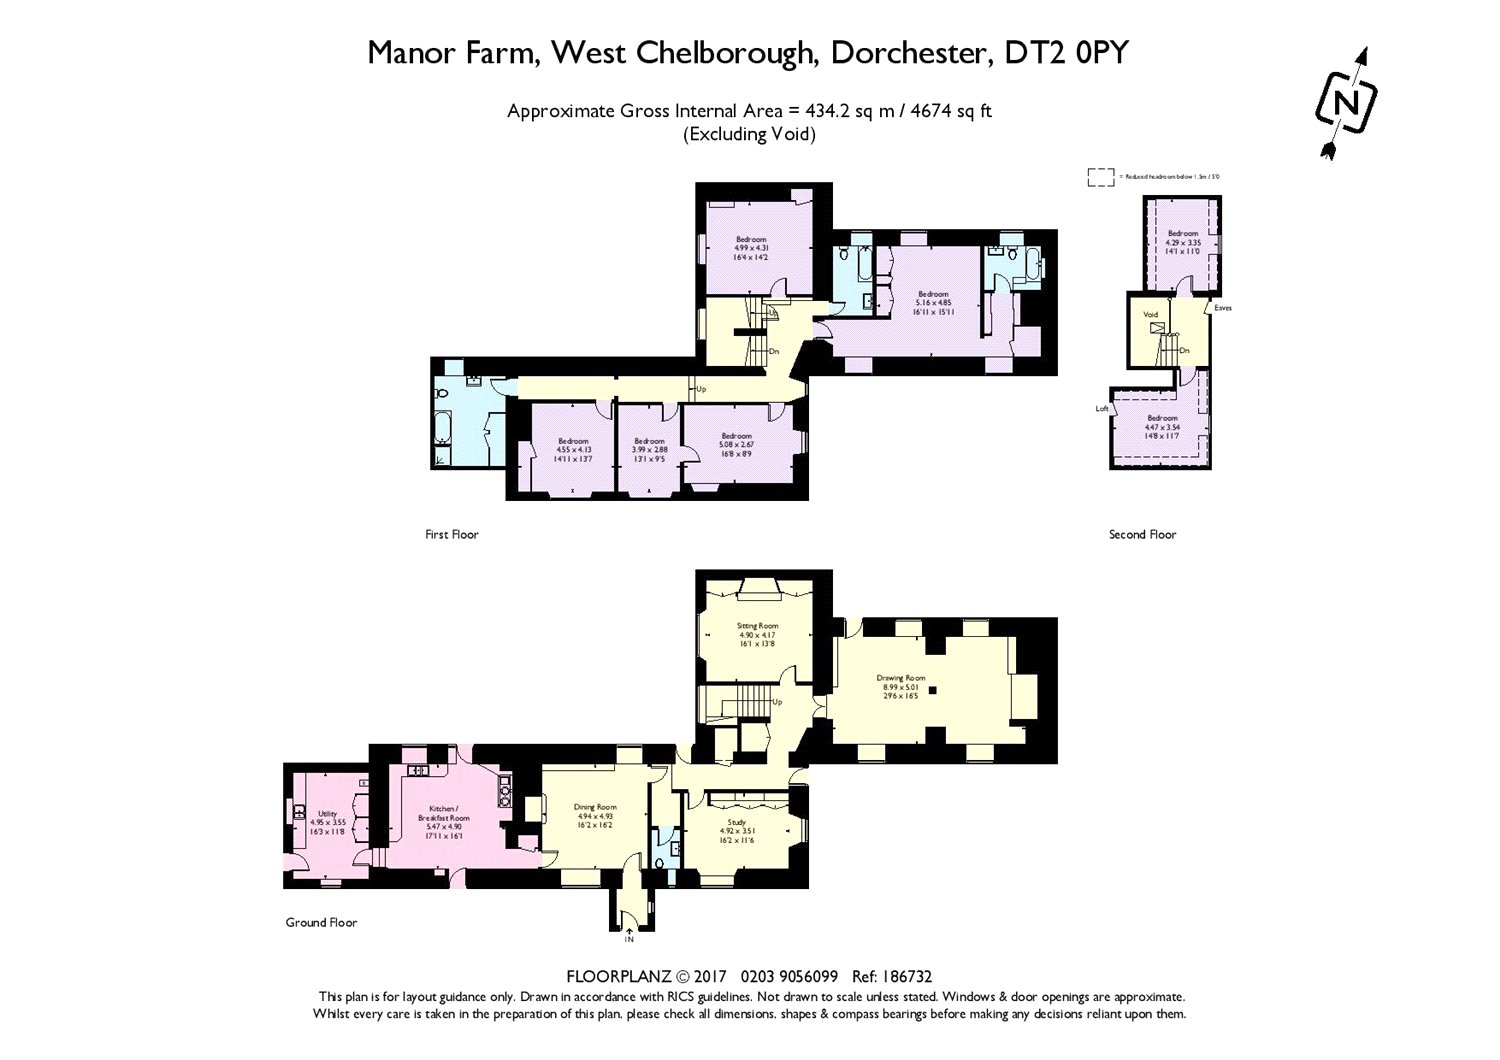 7 Bedrooms Detached house for sale in West Chelborough, Dorchester, Dorset DT2